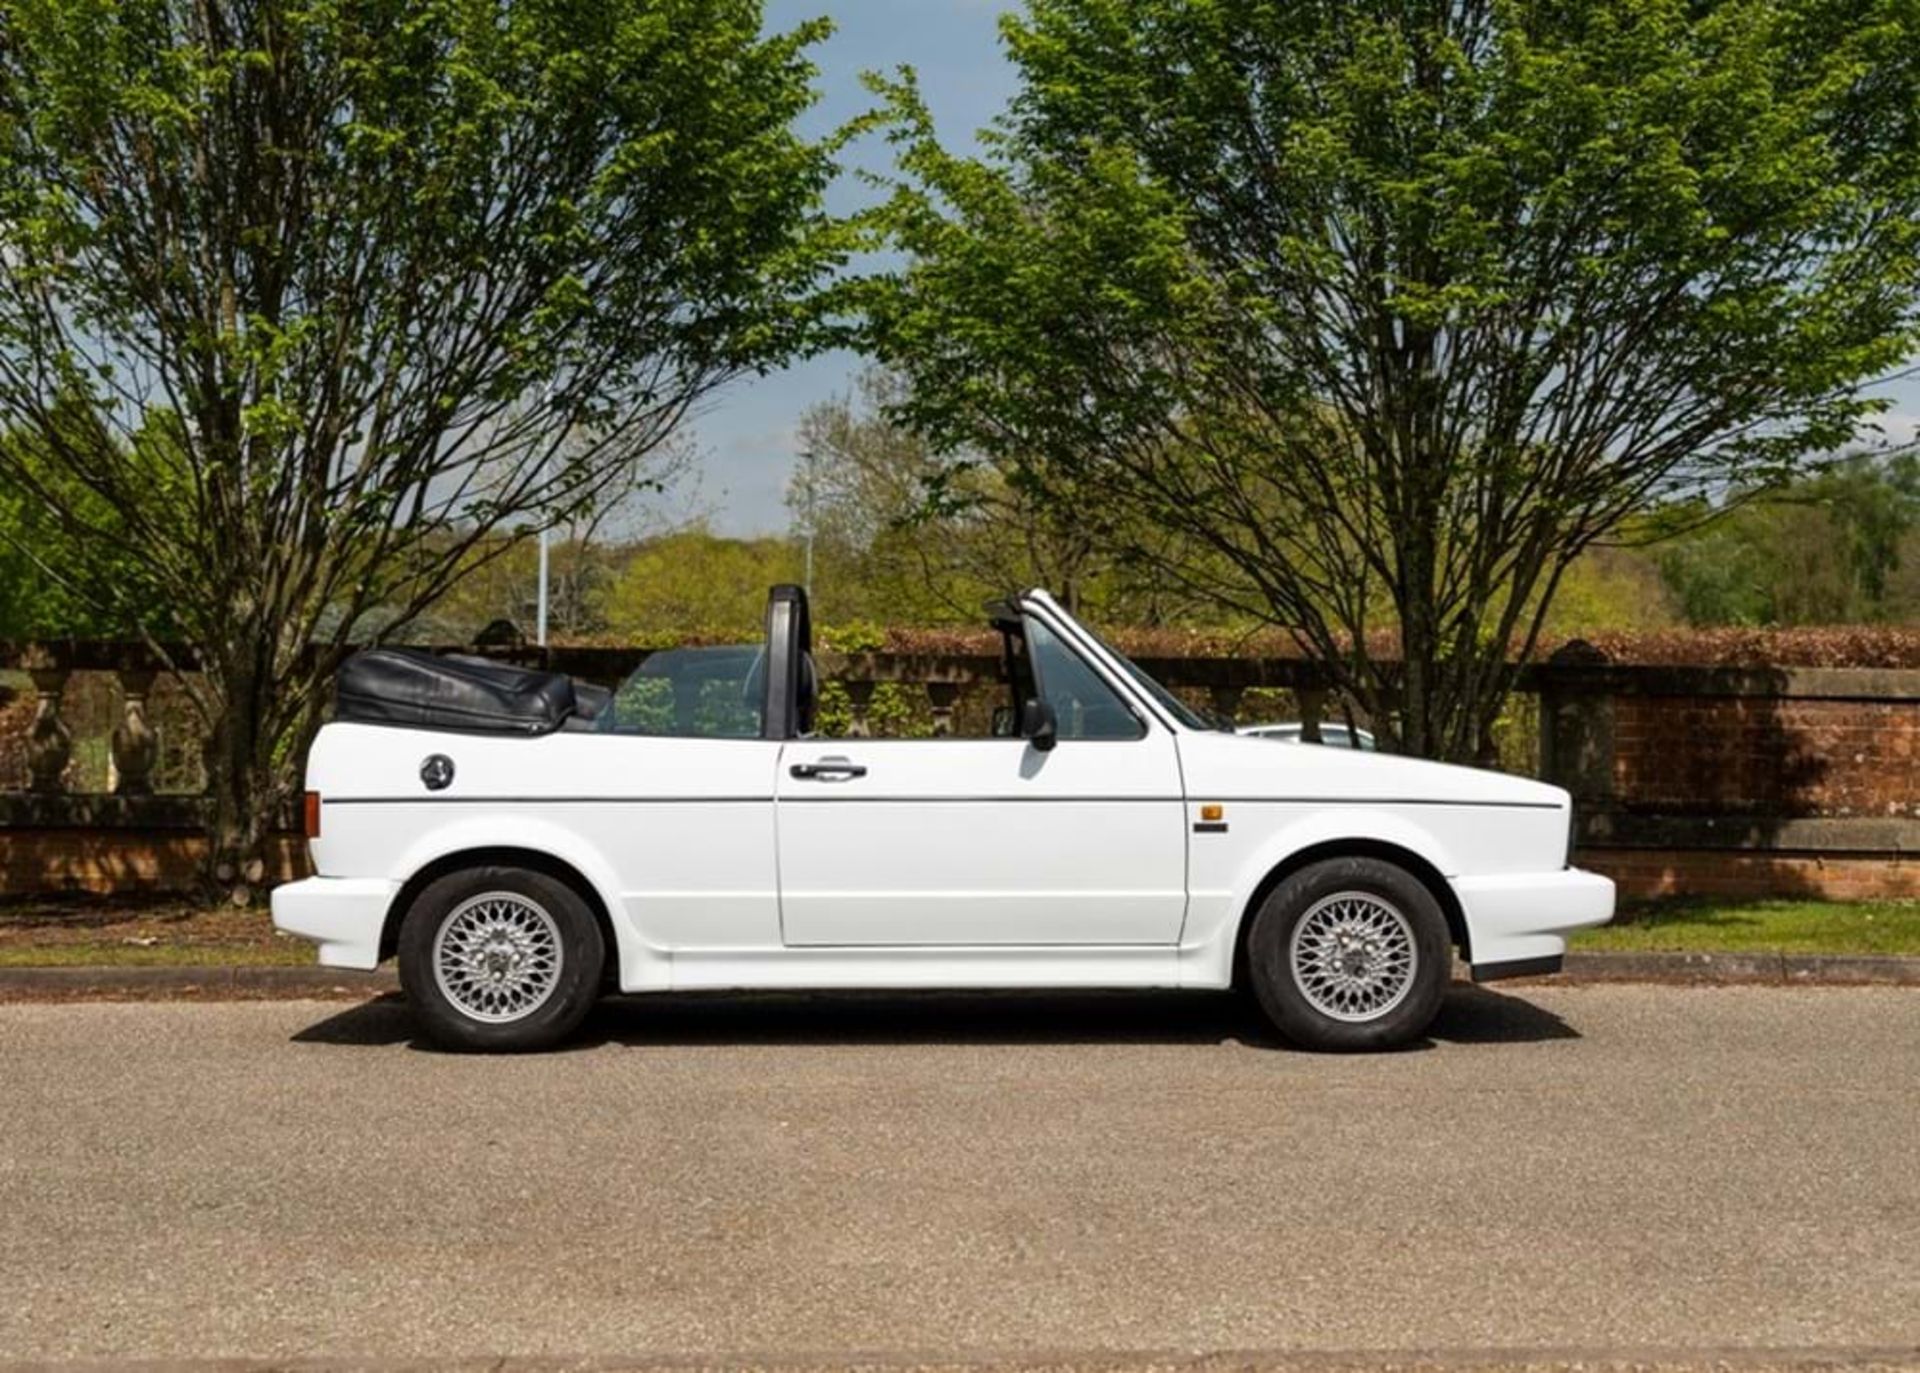 1989 Volkswagen Golf Mk. I Clipper Cabriolet - Image 2 of 10